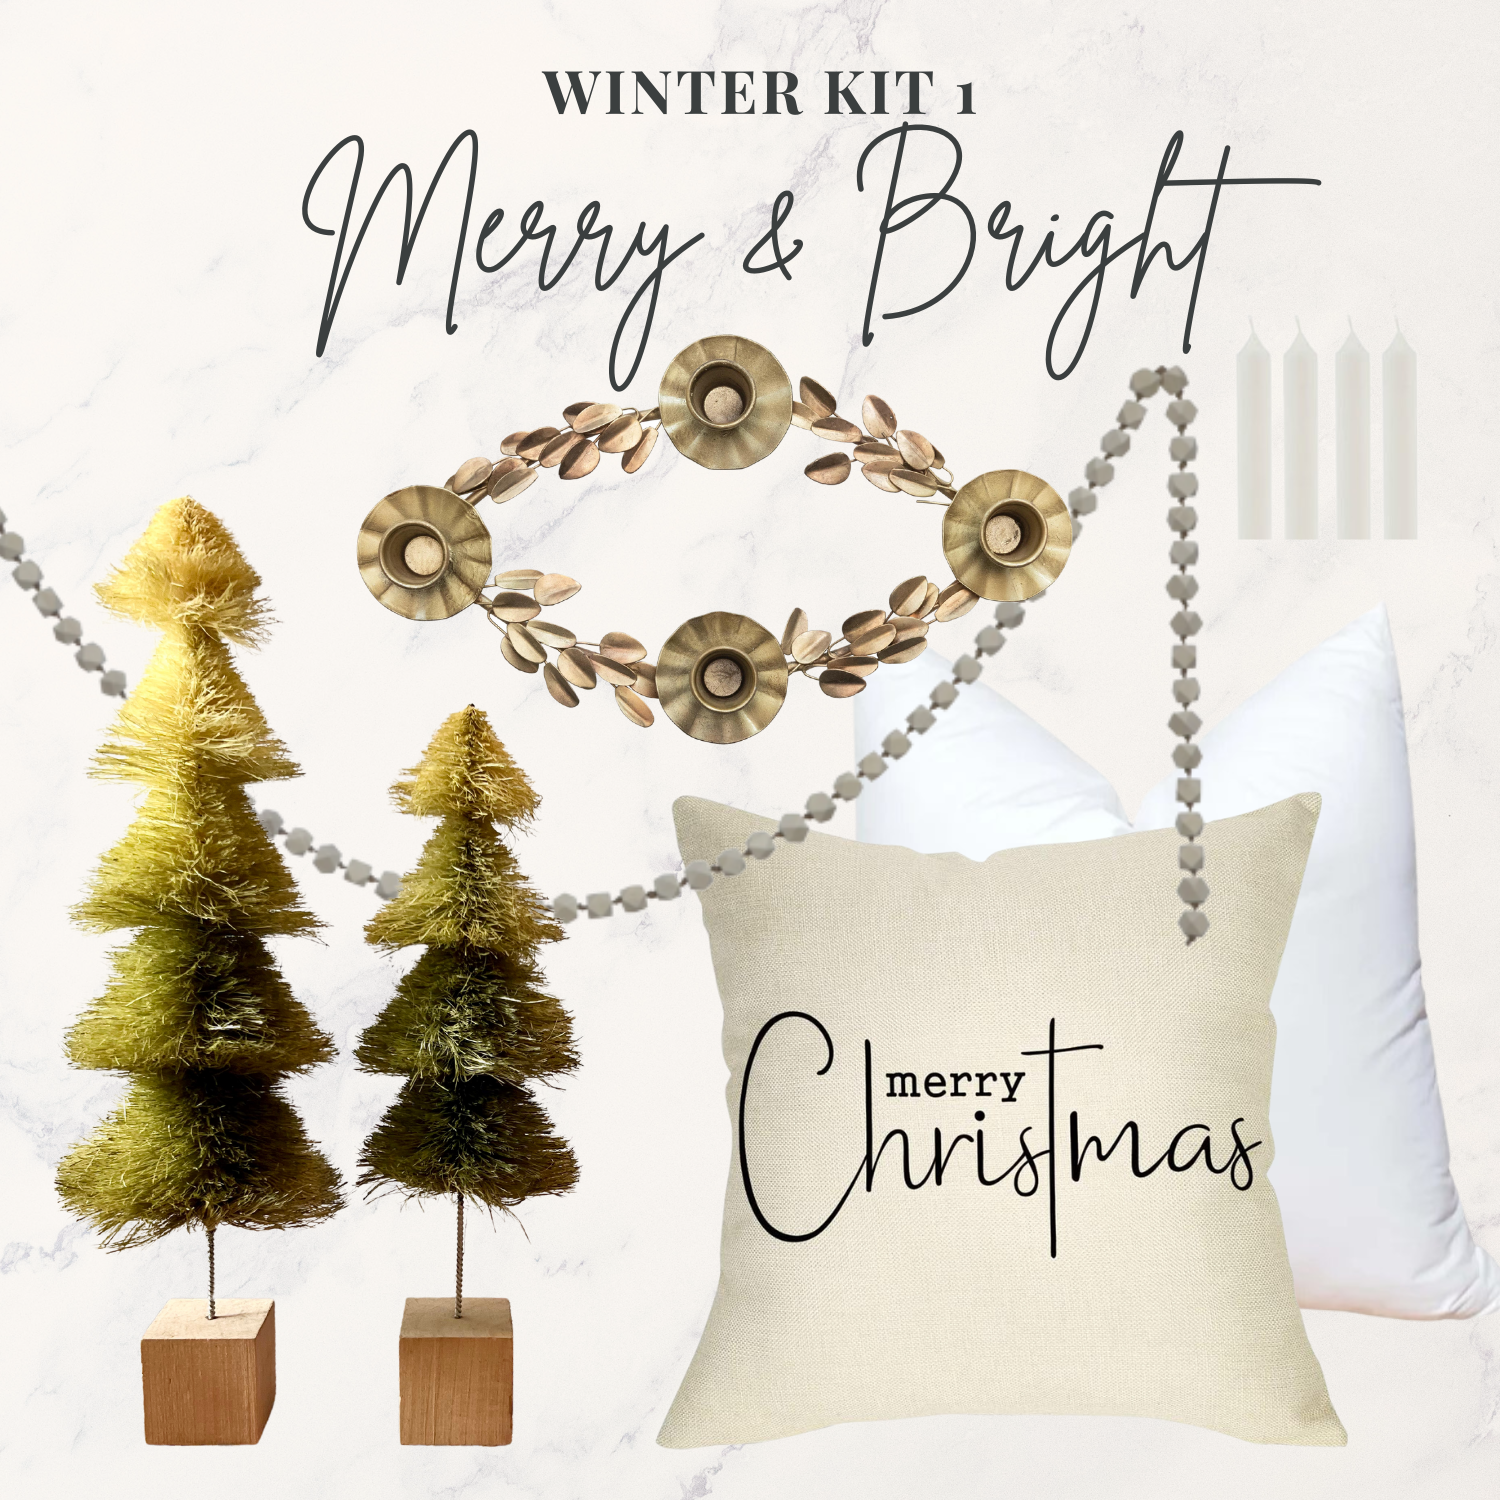 Winter Kit 1 - Merry & Bright 2022